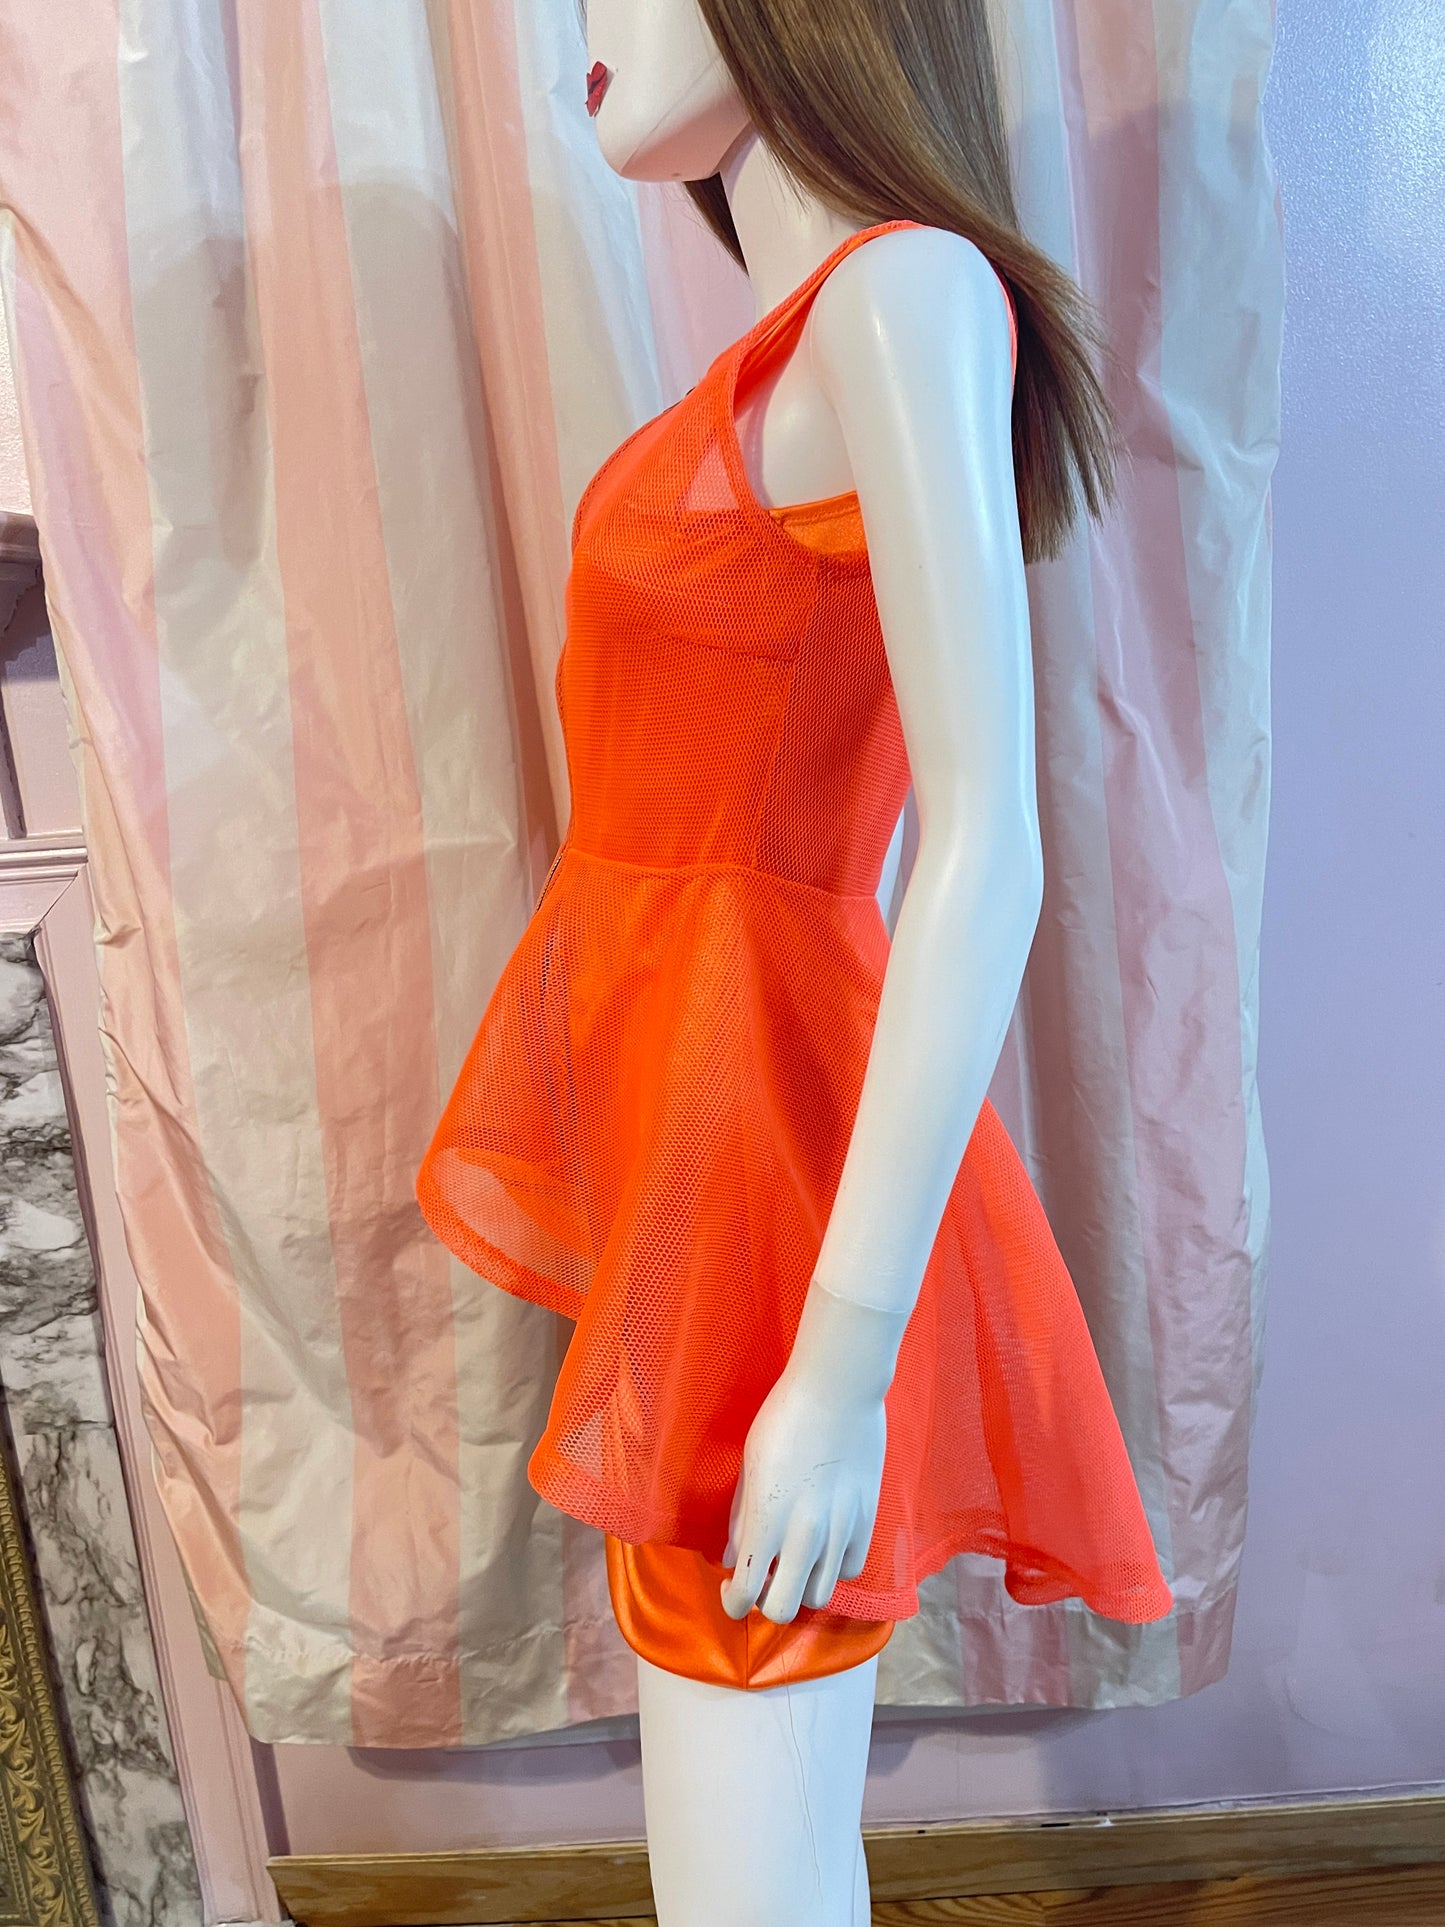 Neon Orange Satin Stretch Dress & Vest top